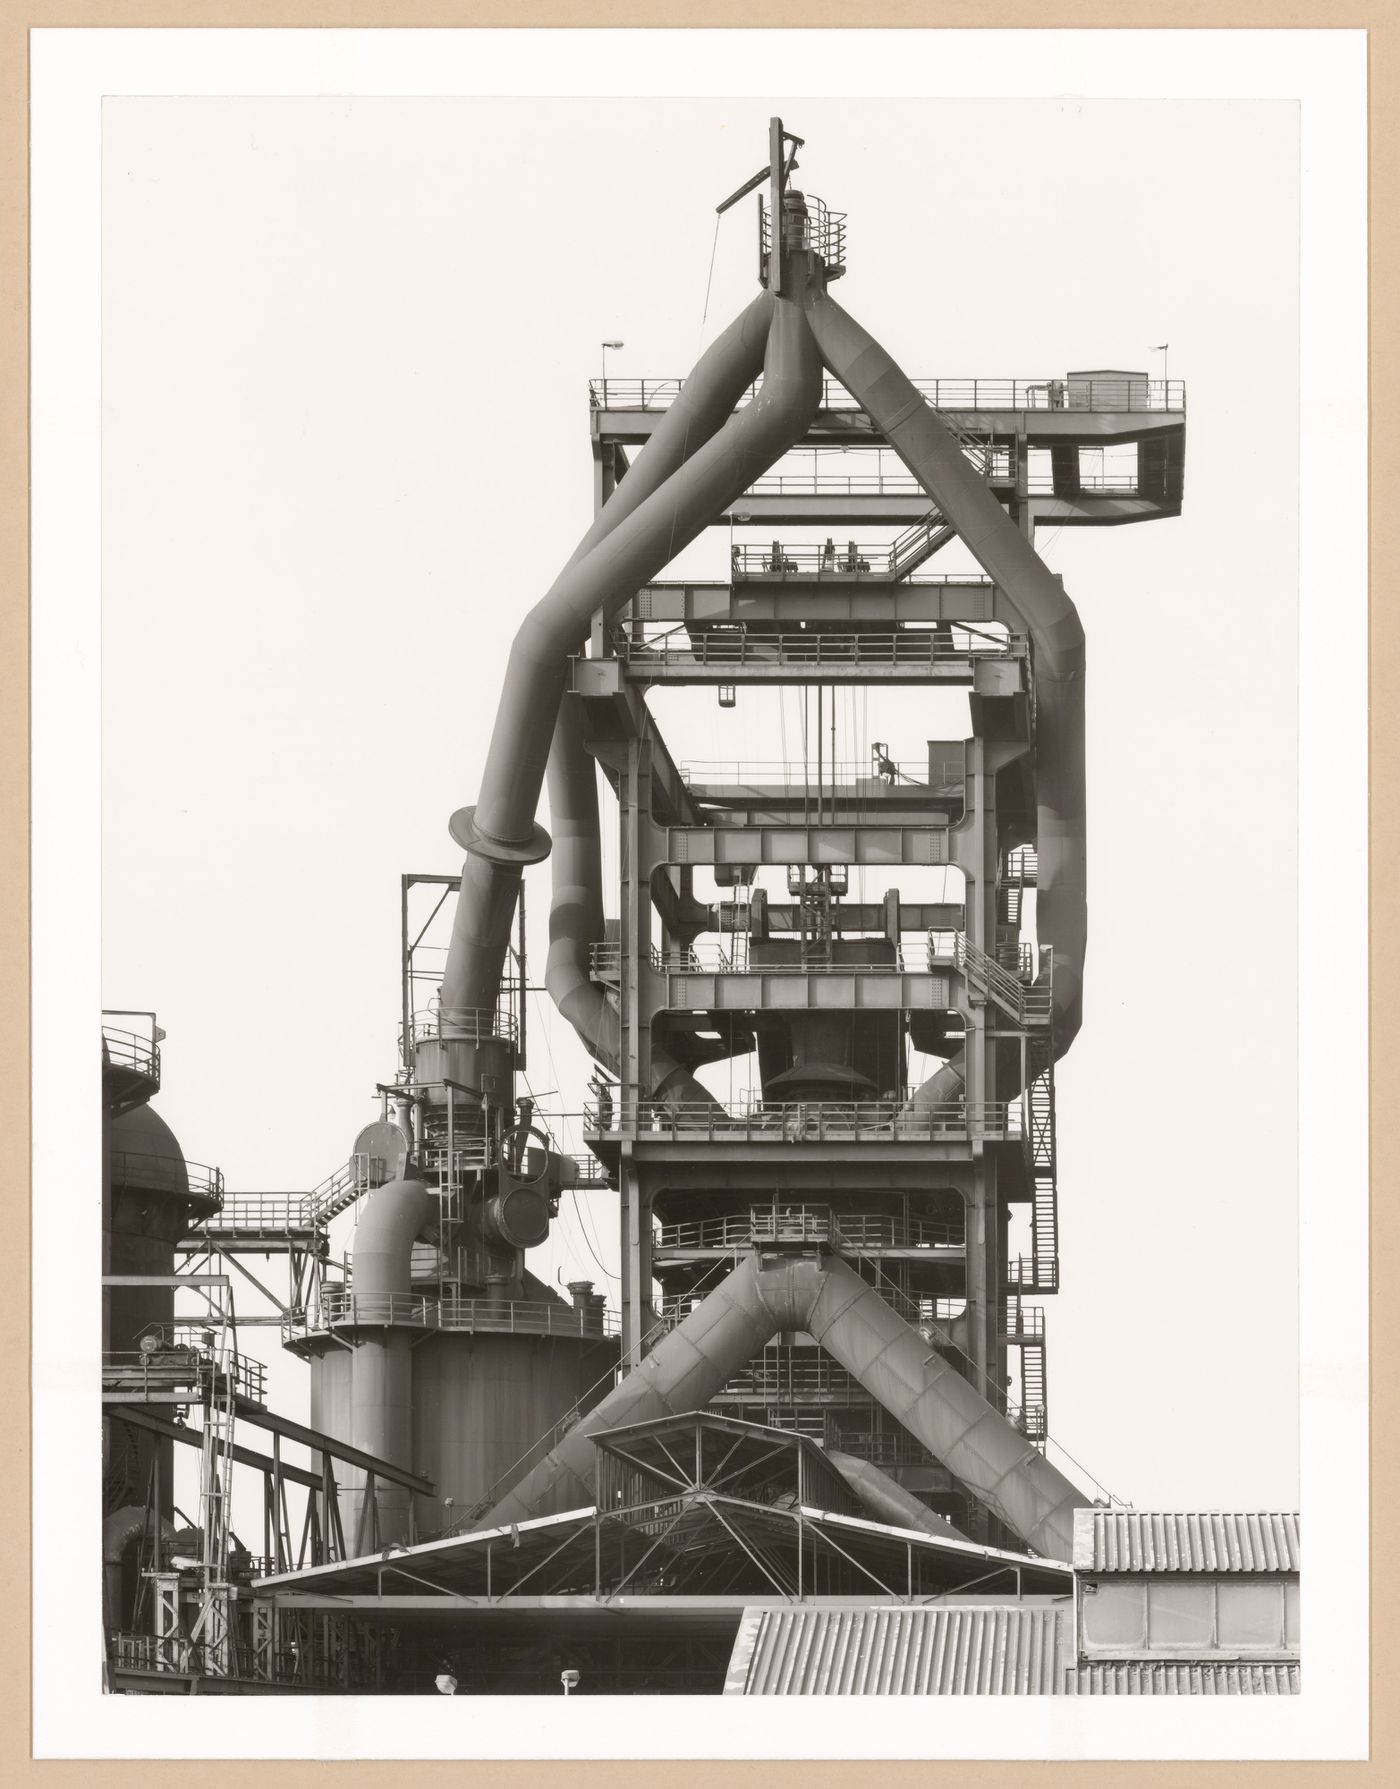 View of blast furnace head A of Metallhüttenwerk industrial plant, Lübeck-Herrenwyk, Germany